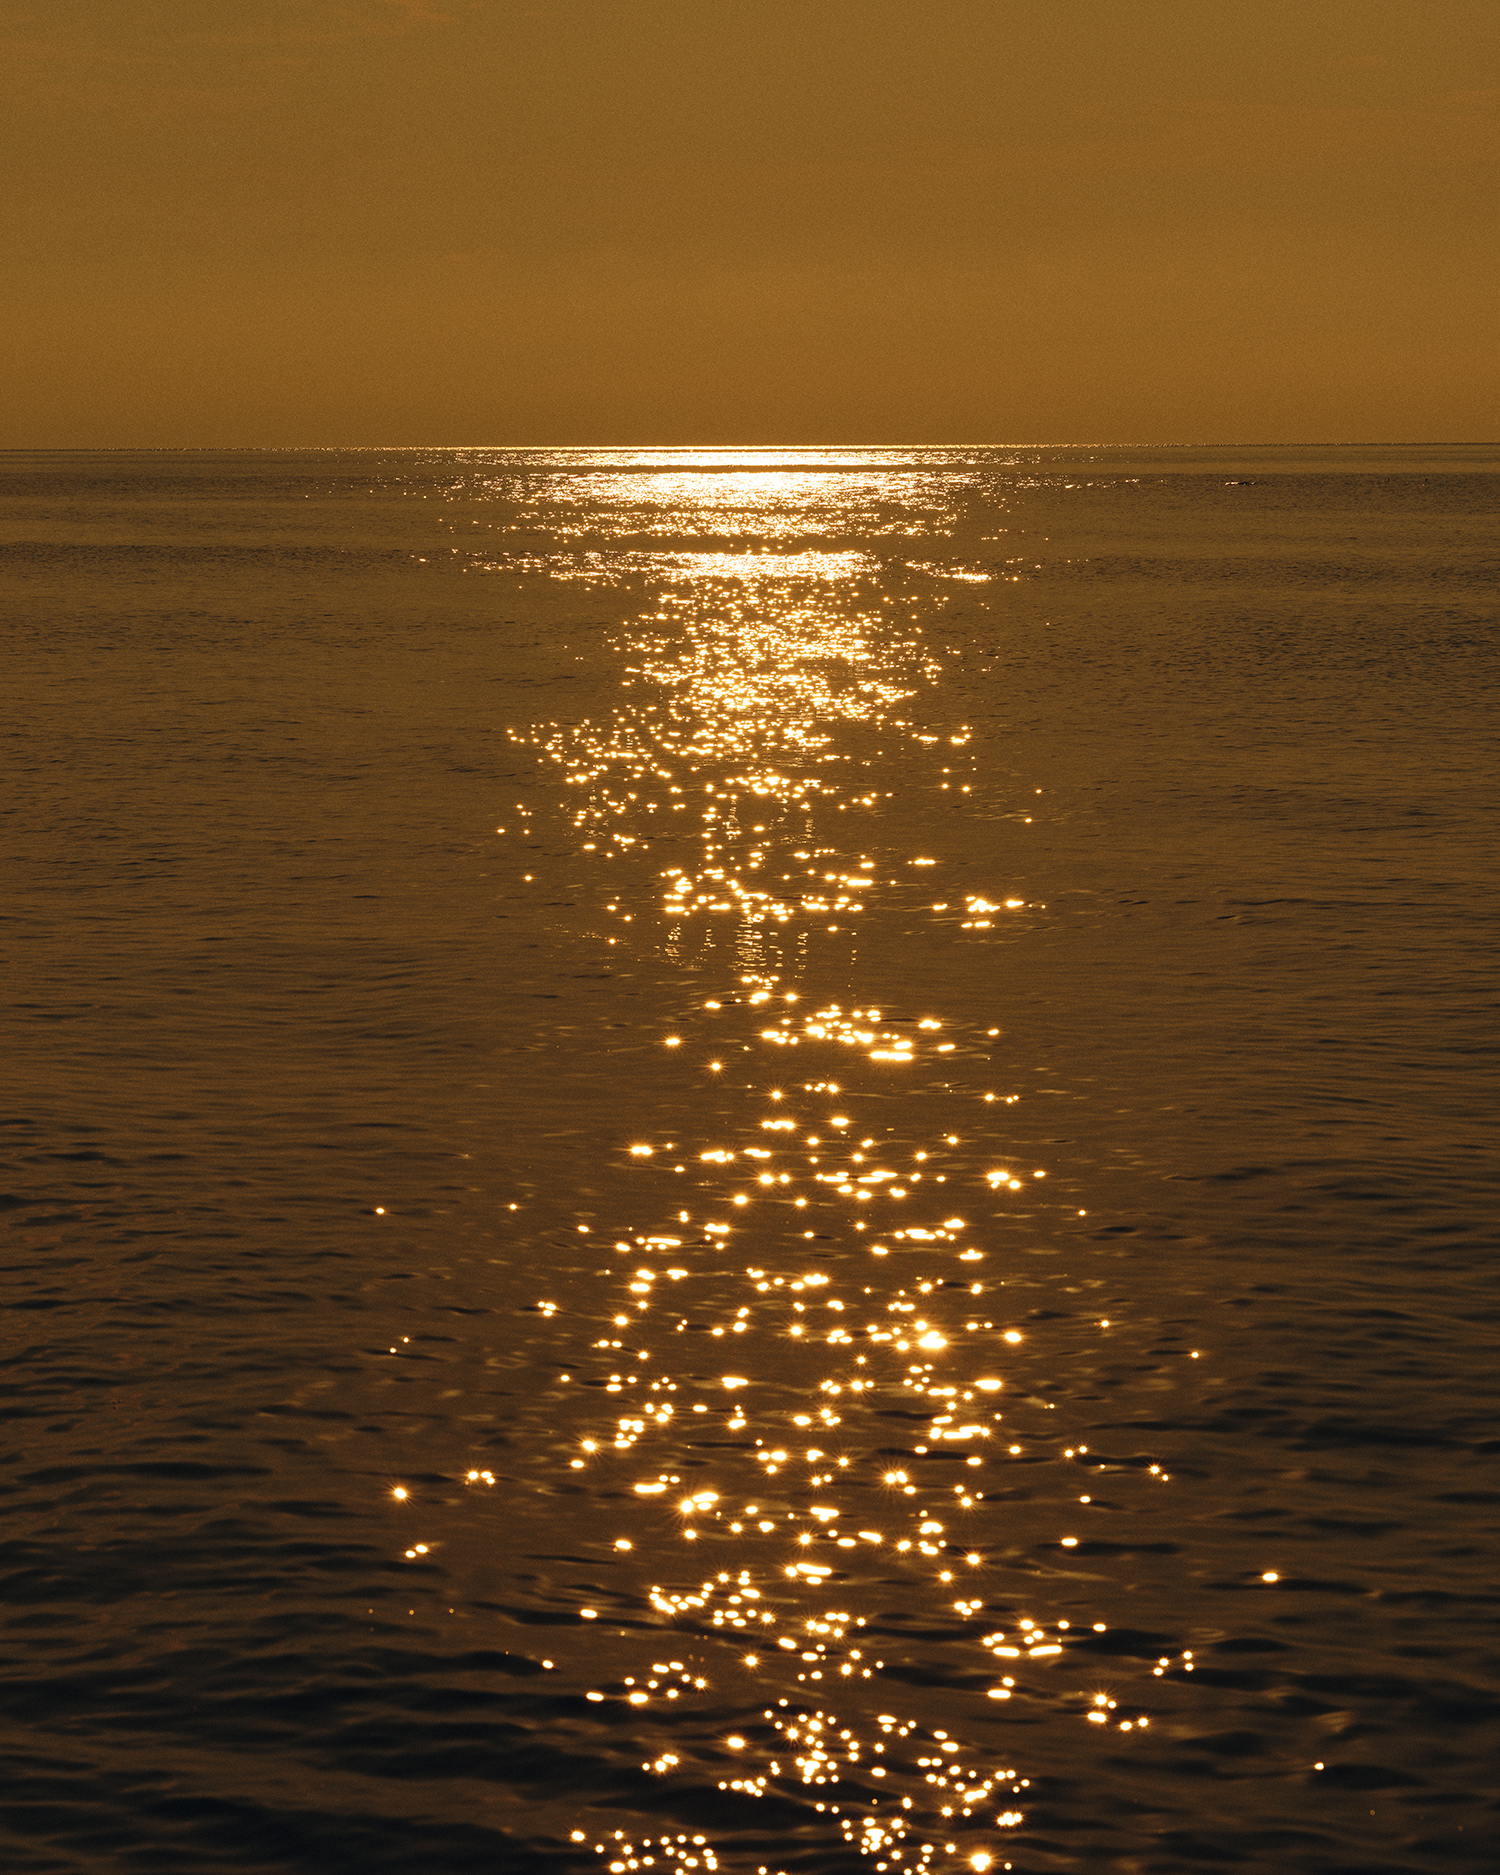 Sun rays shining on lake water with a hazy yellow sky